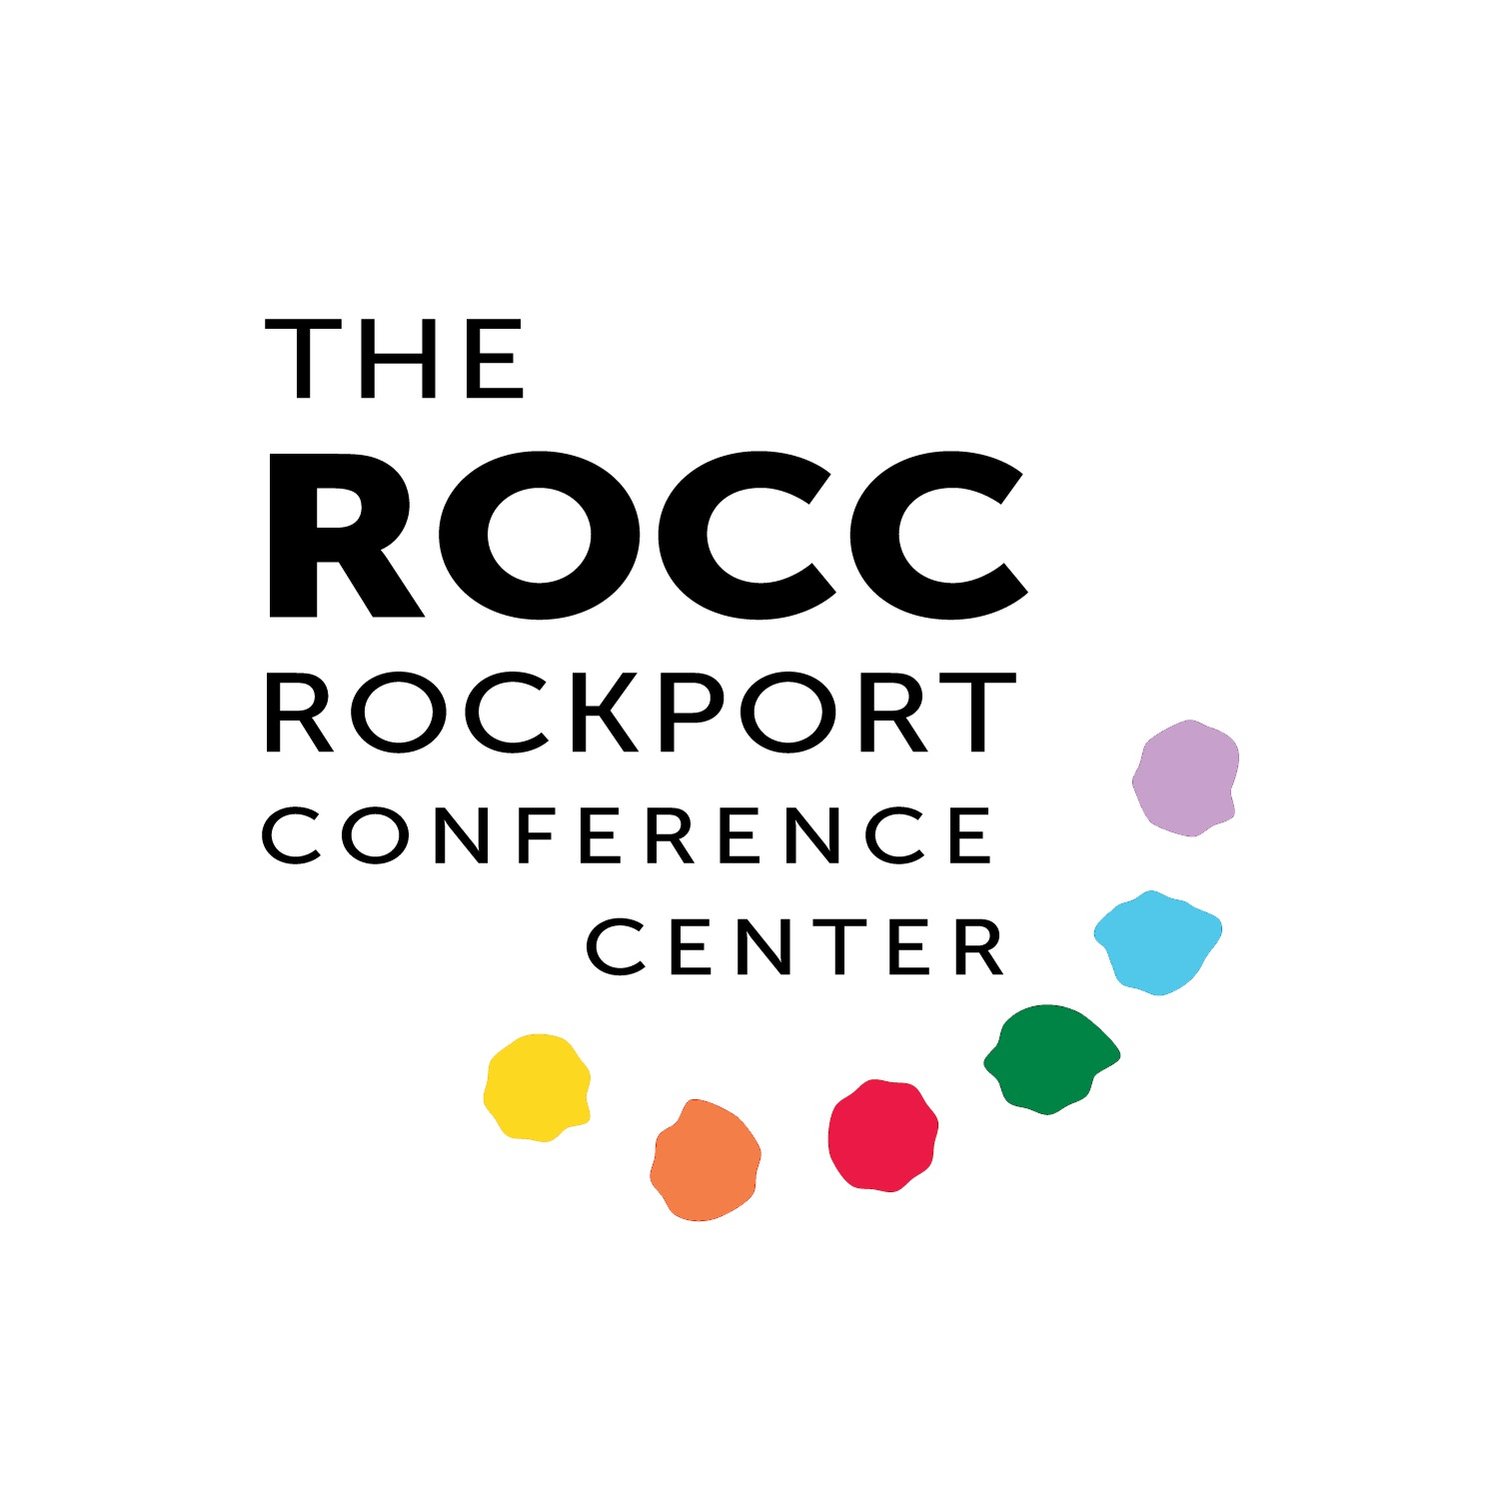 The ROCC